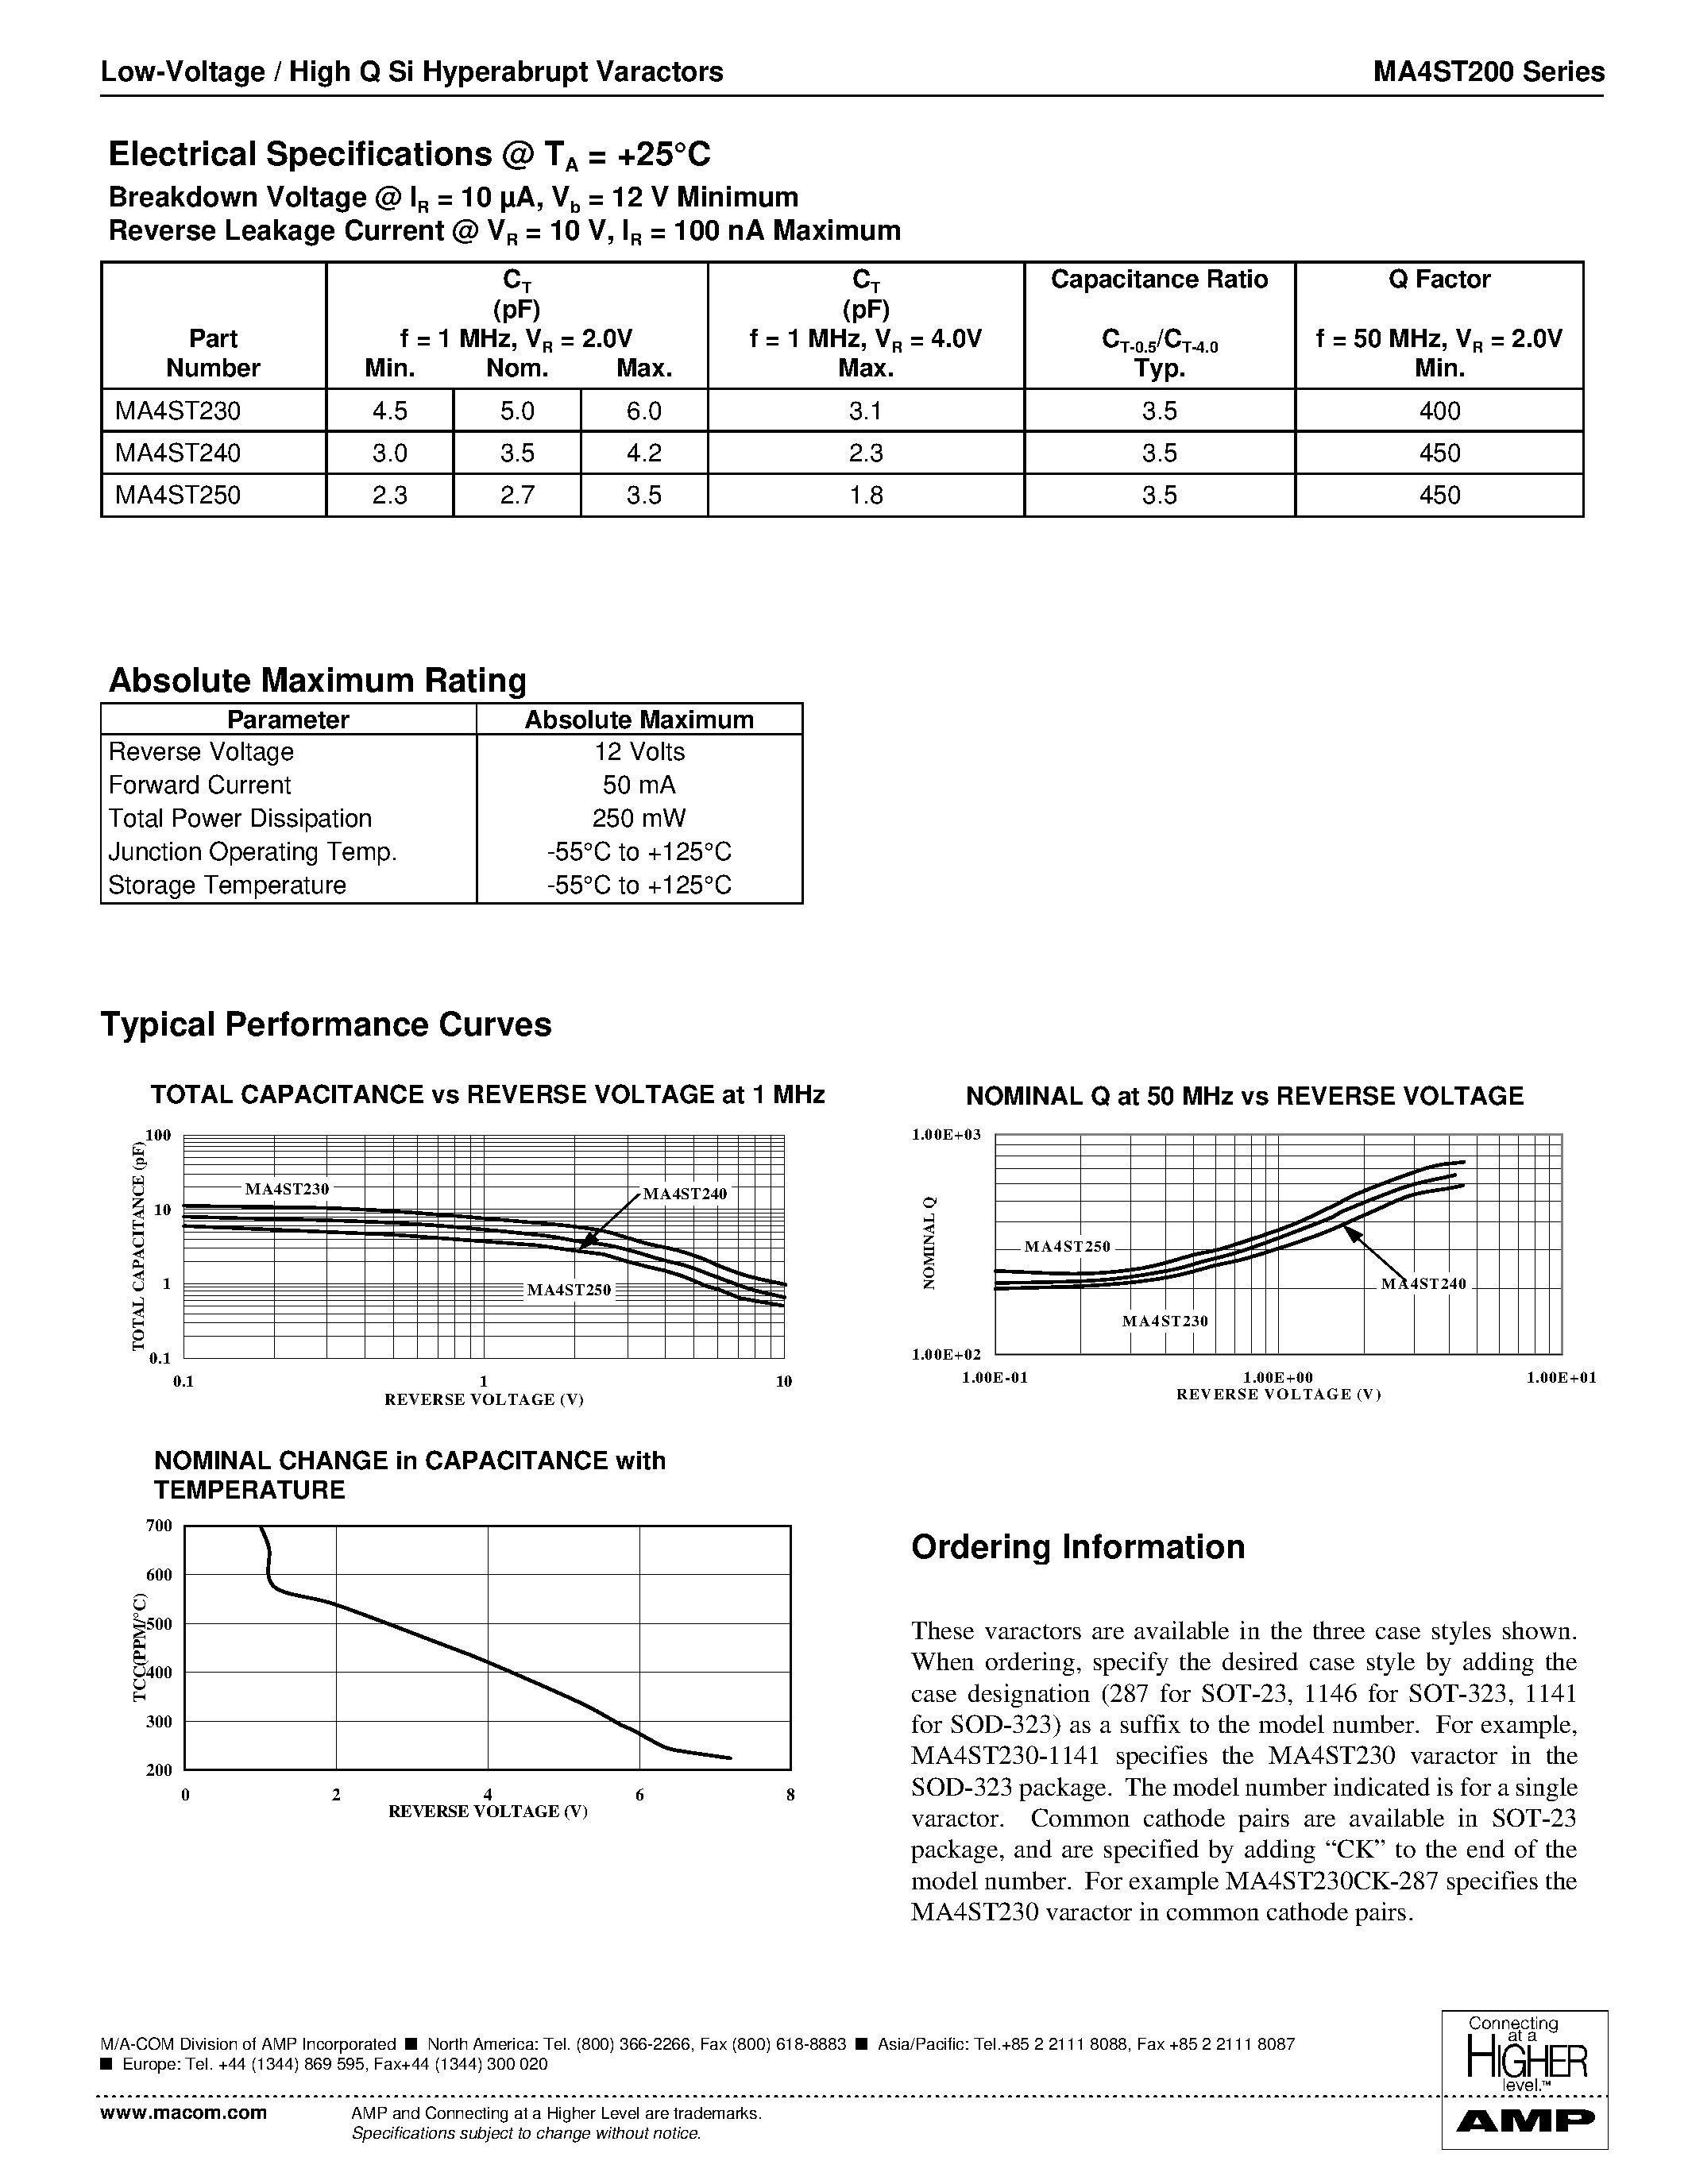 Datasheet MA4ST250 - Low-Voltage / High Q Si Hyperabrupt Varactors page 2